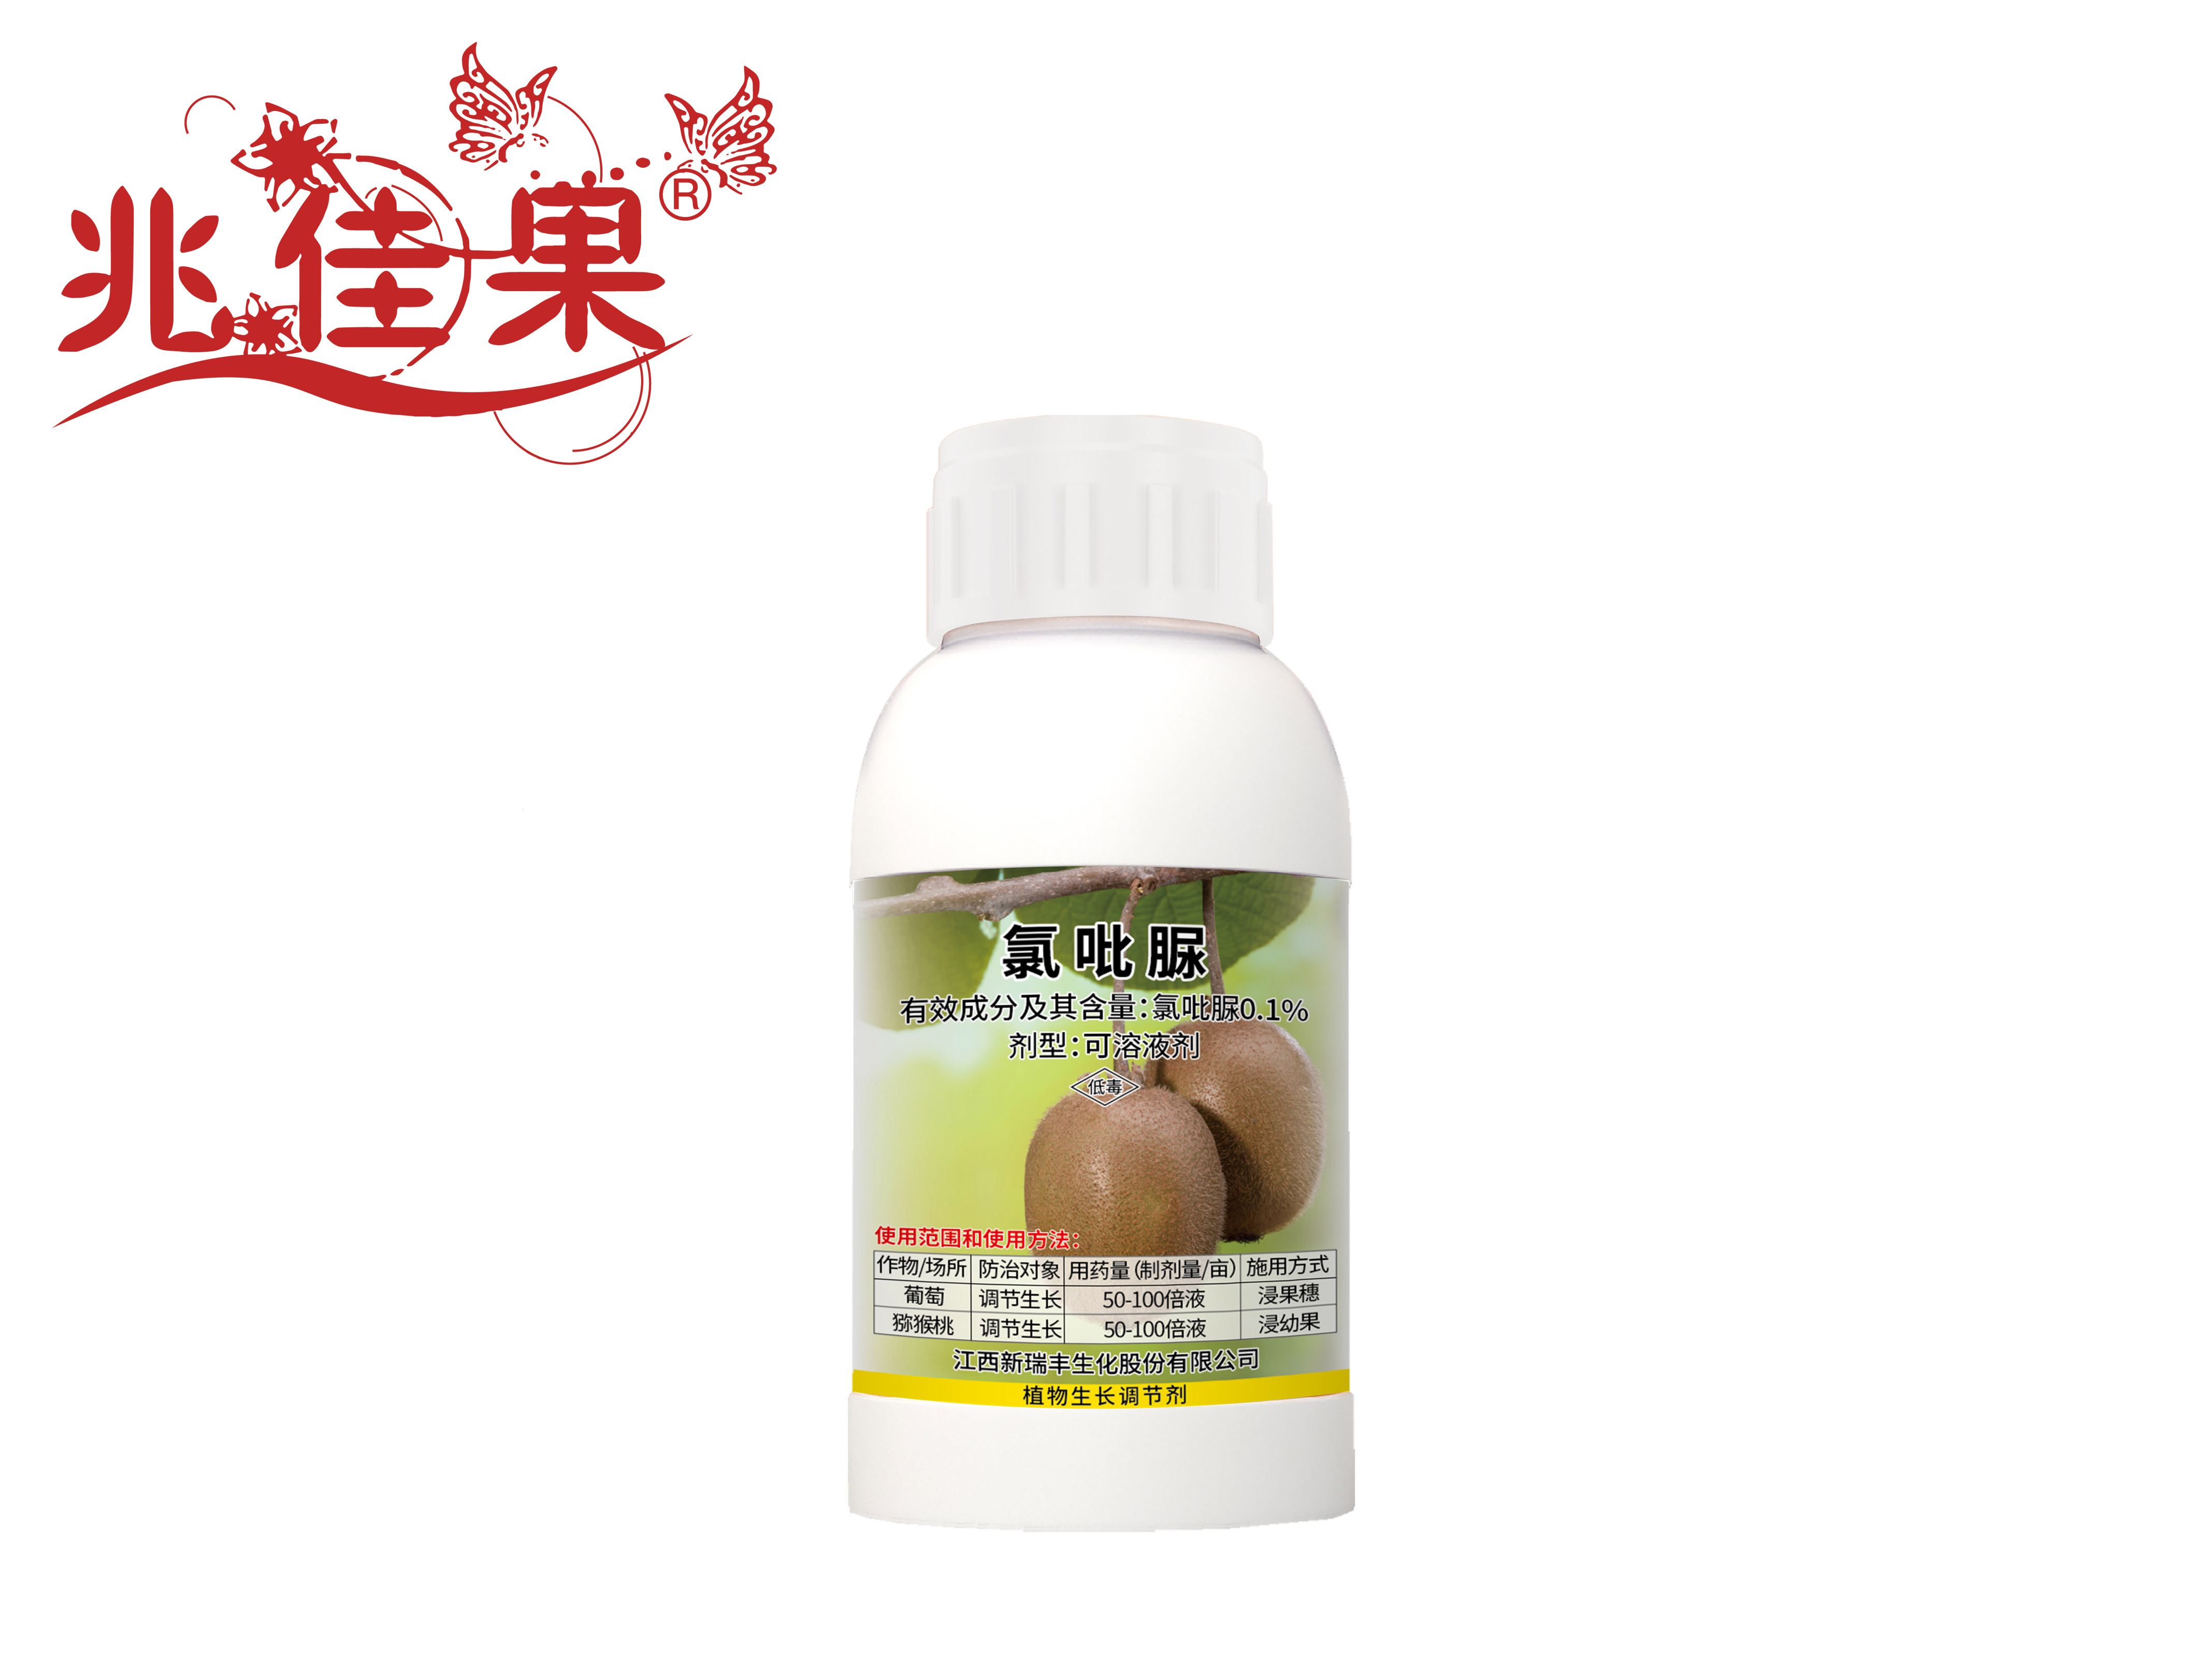 0.1 Percent Clorfenuron Soluble Solution (Special for Kiwi Fruit)